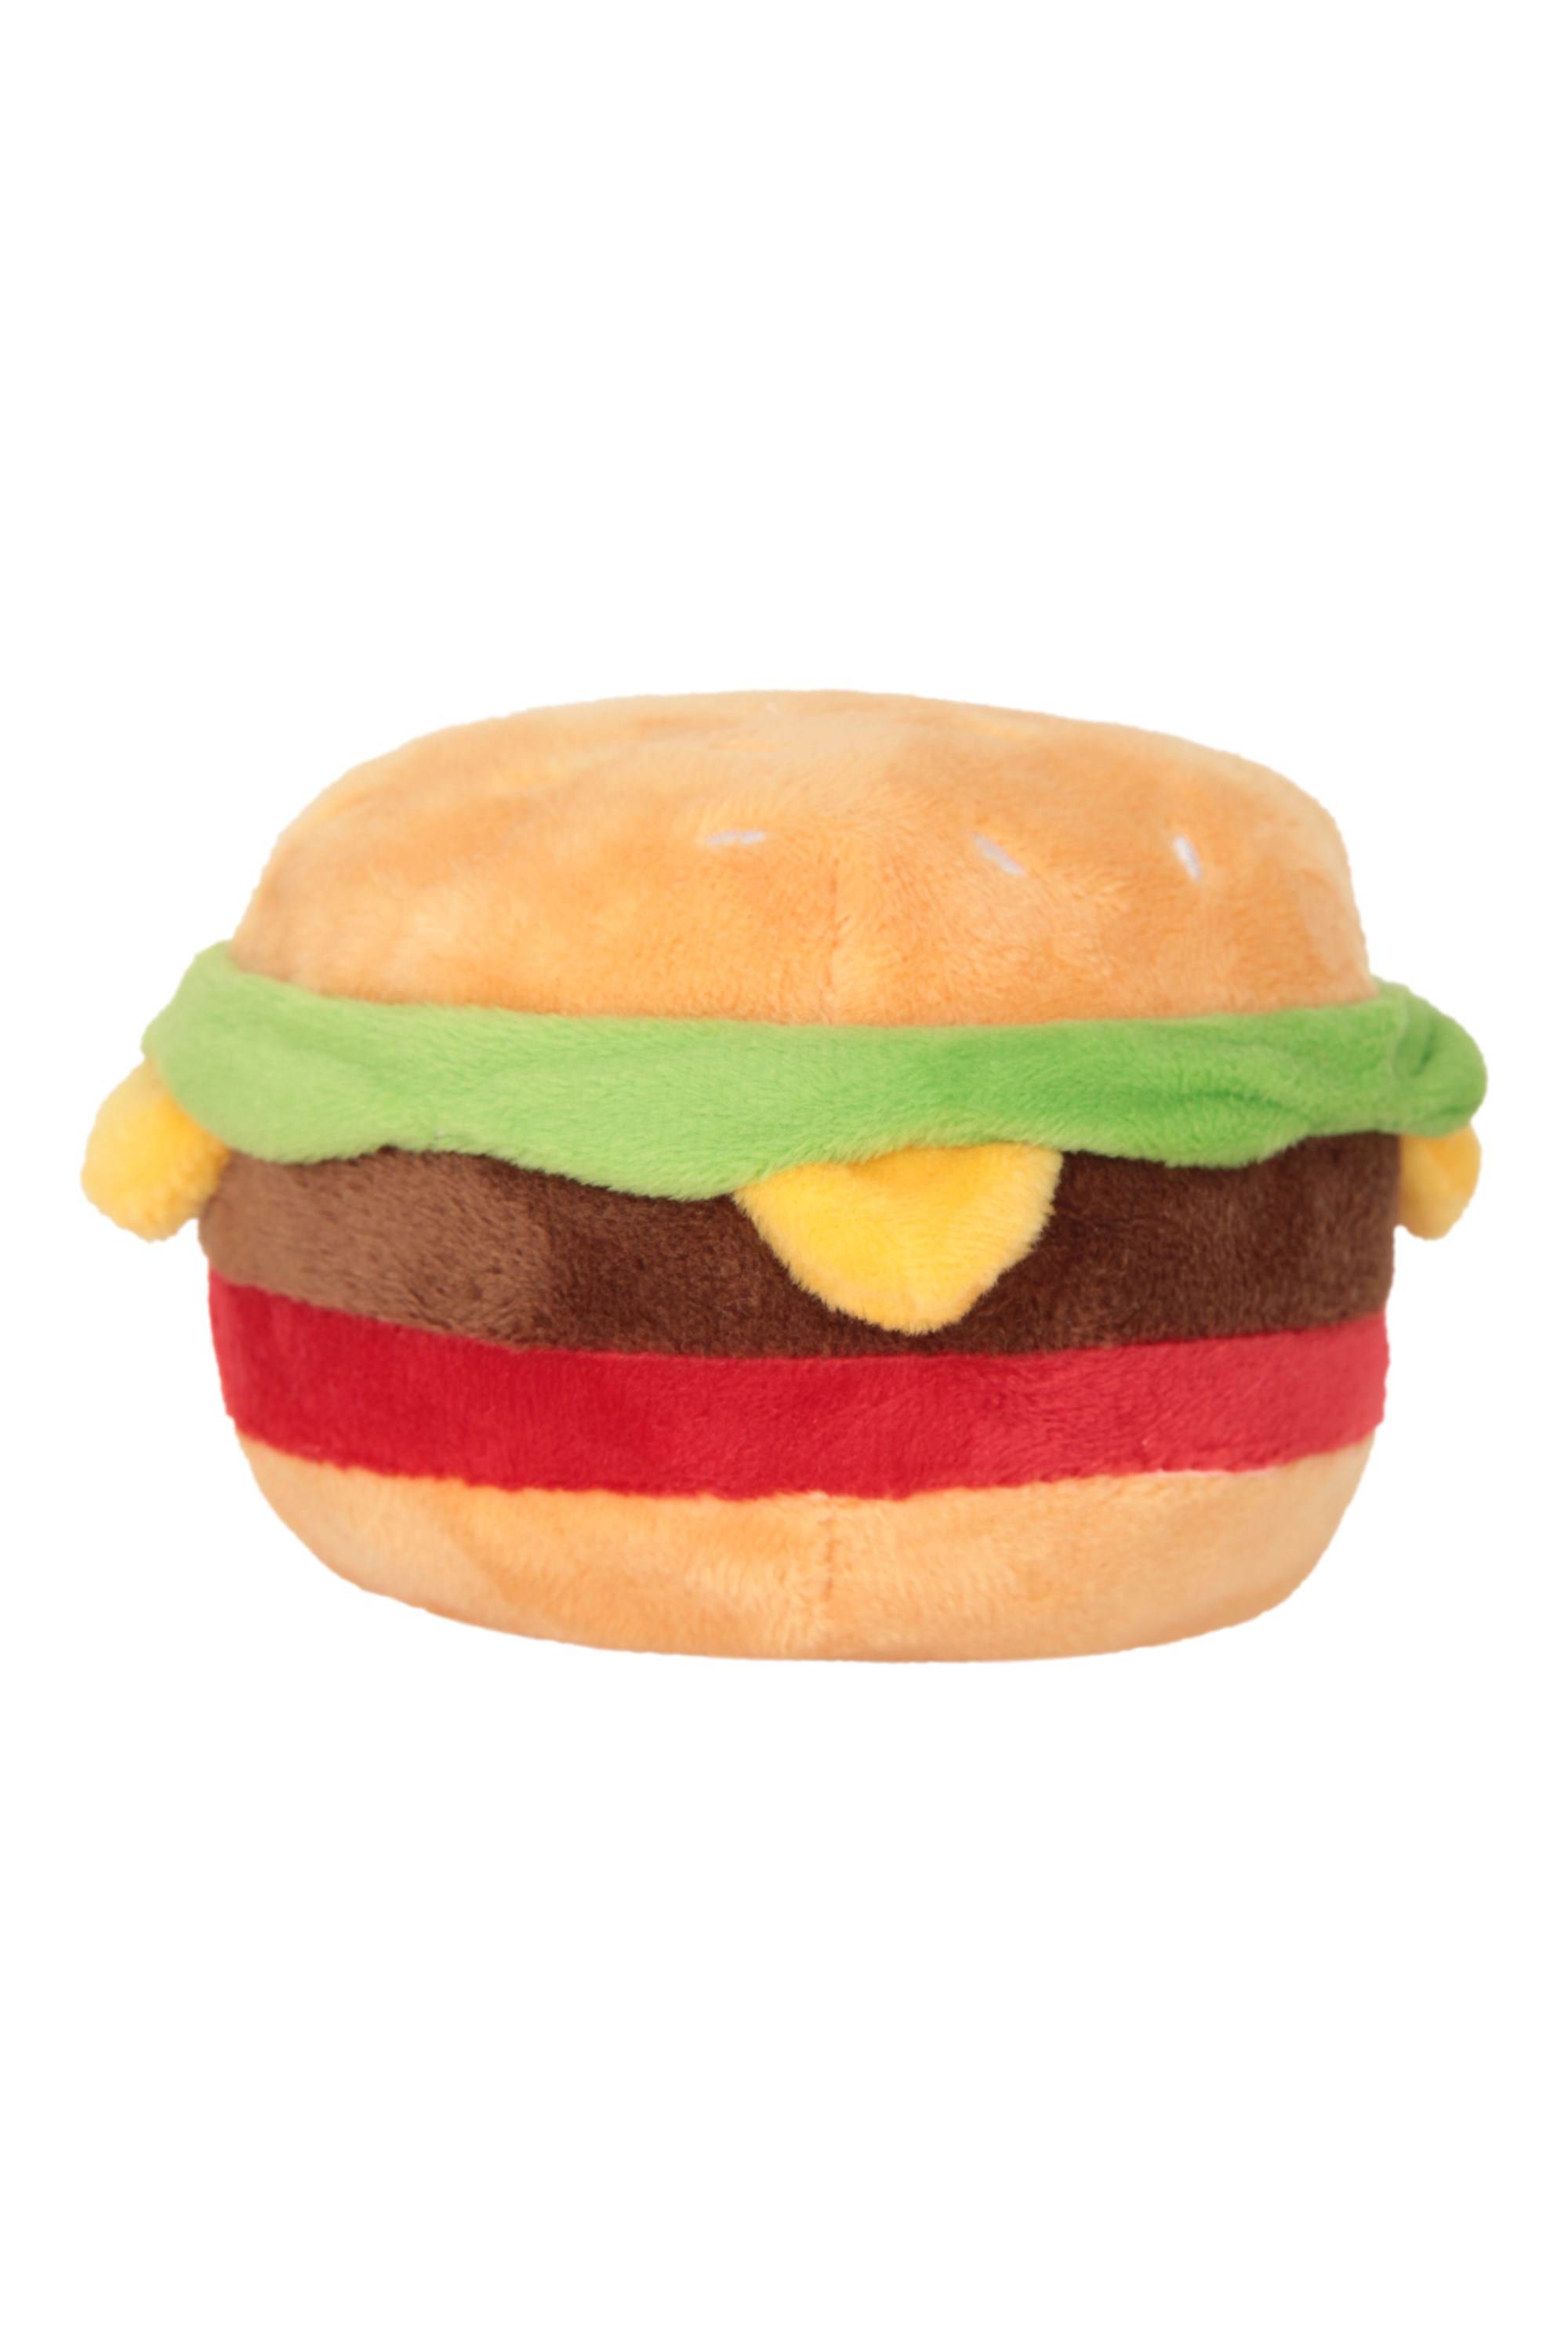 Jackson Pet Co zabawka hamburger - Green